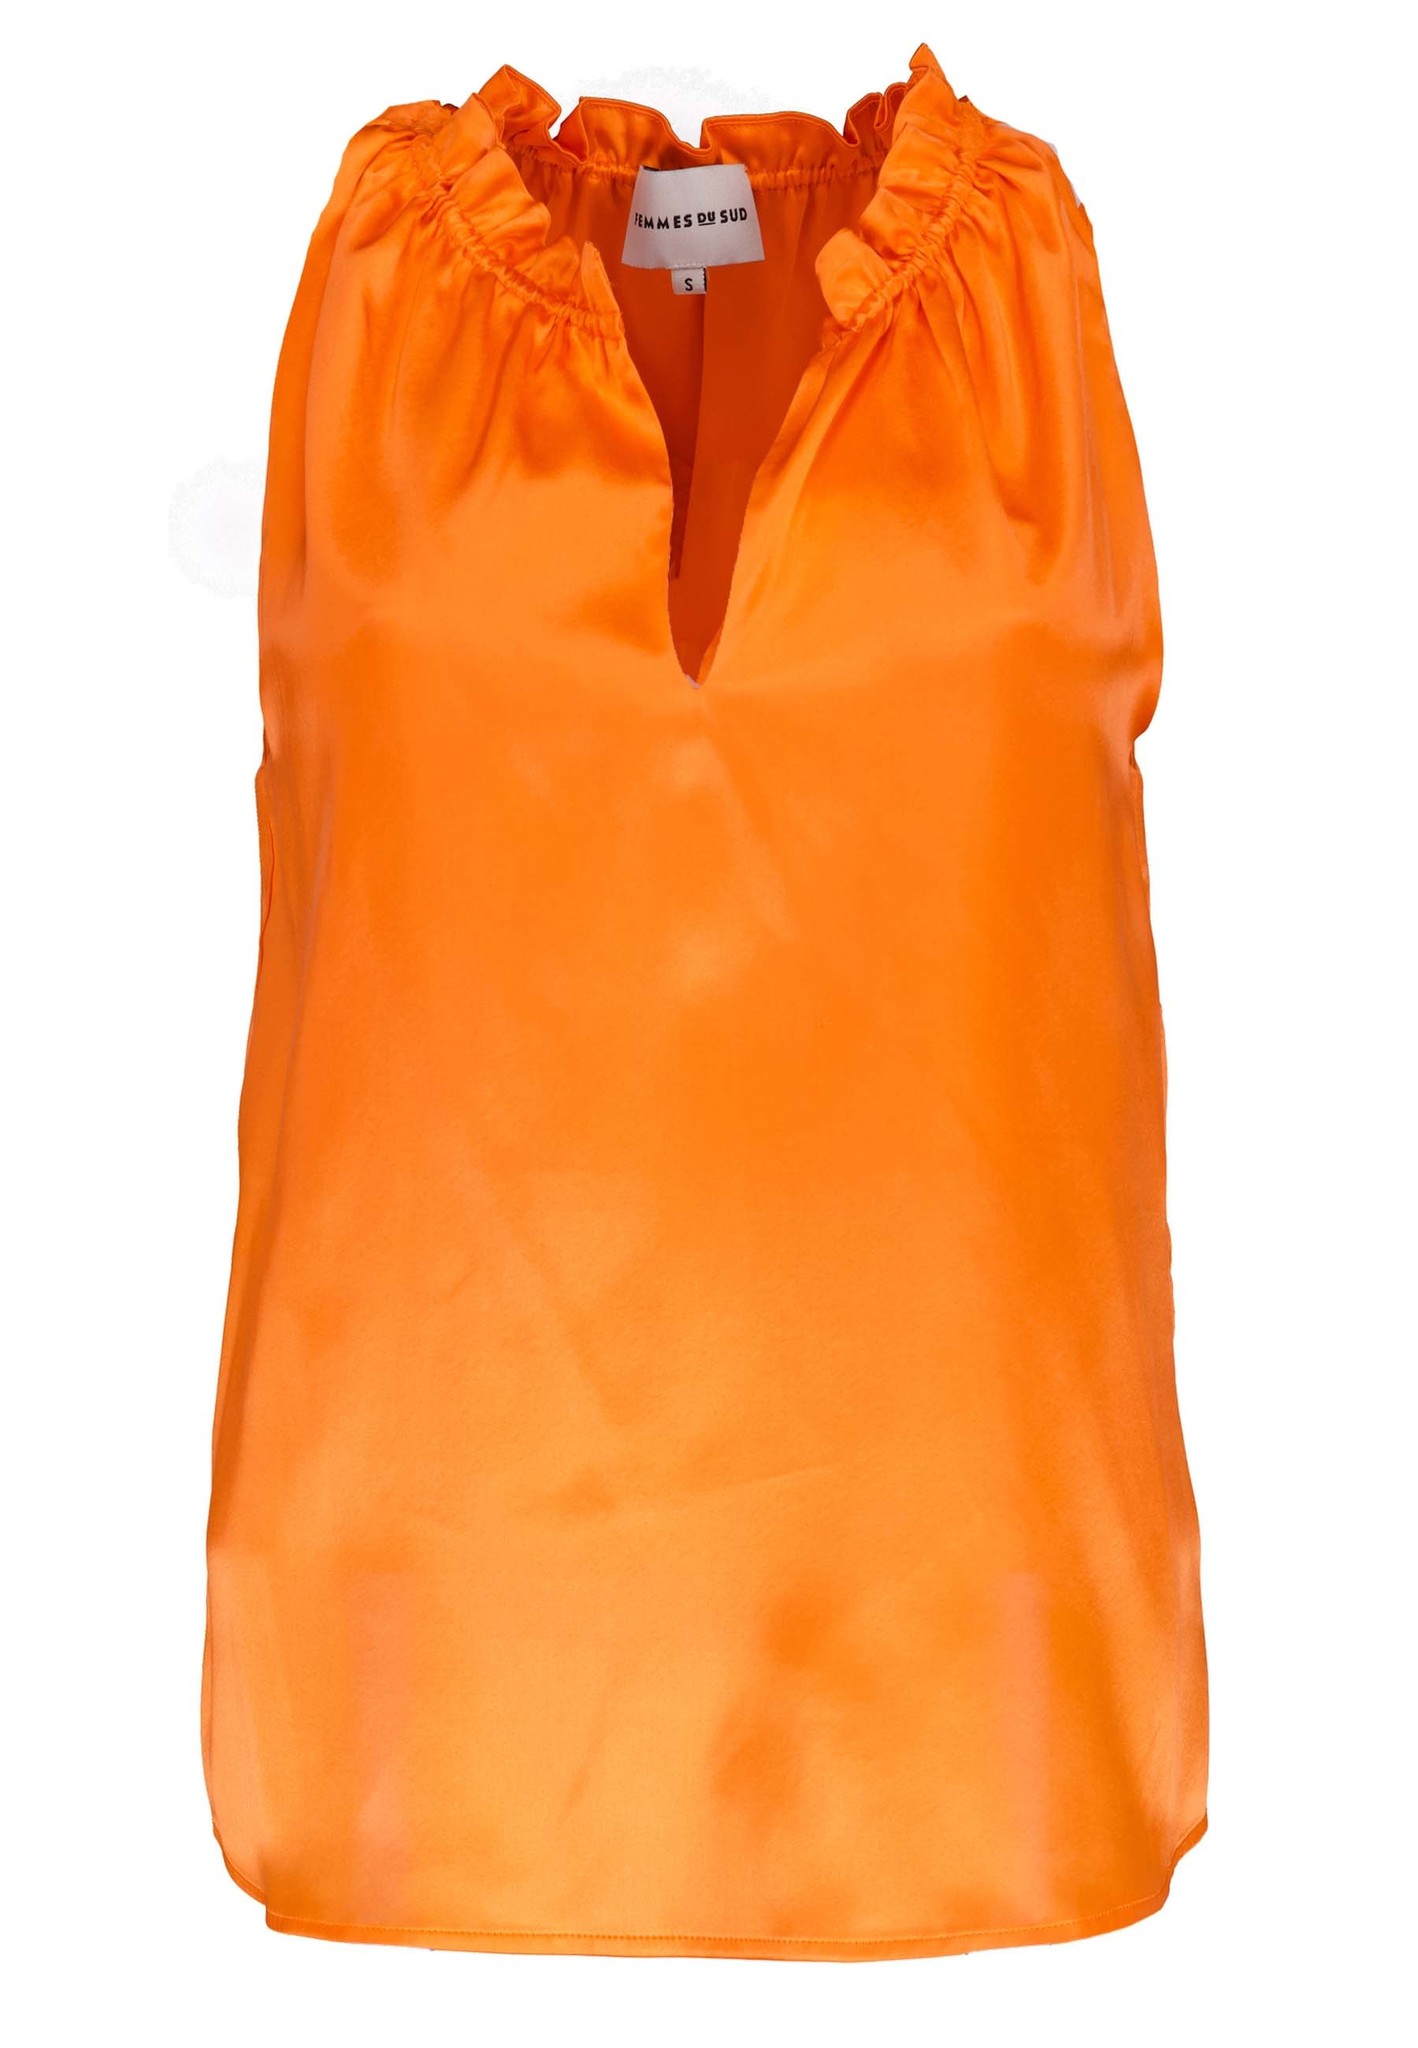 Femmes du Sud Top Oranje maat XS Noel tops oranje